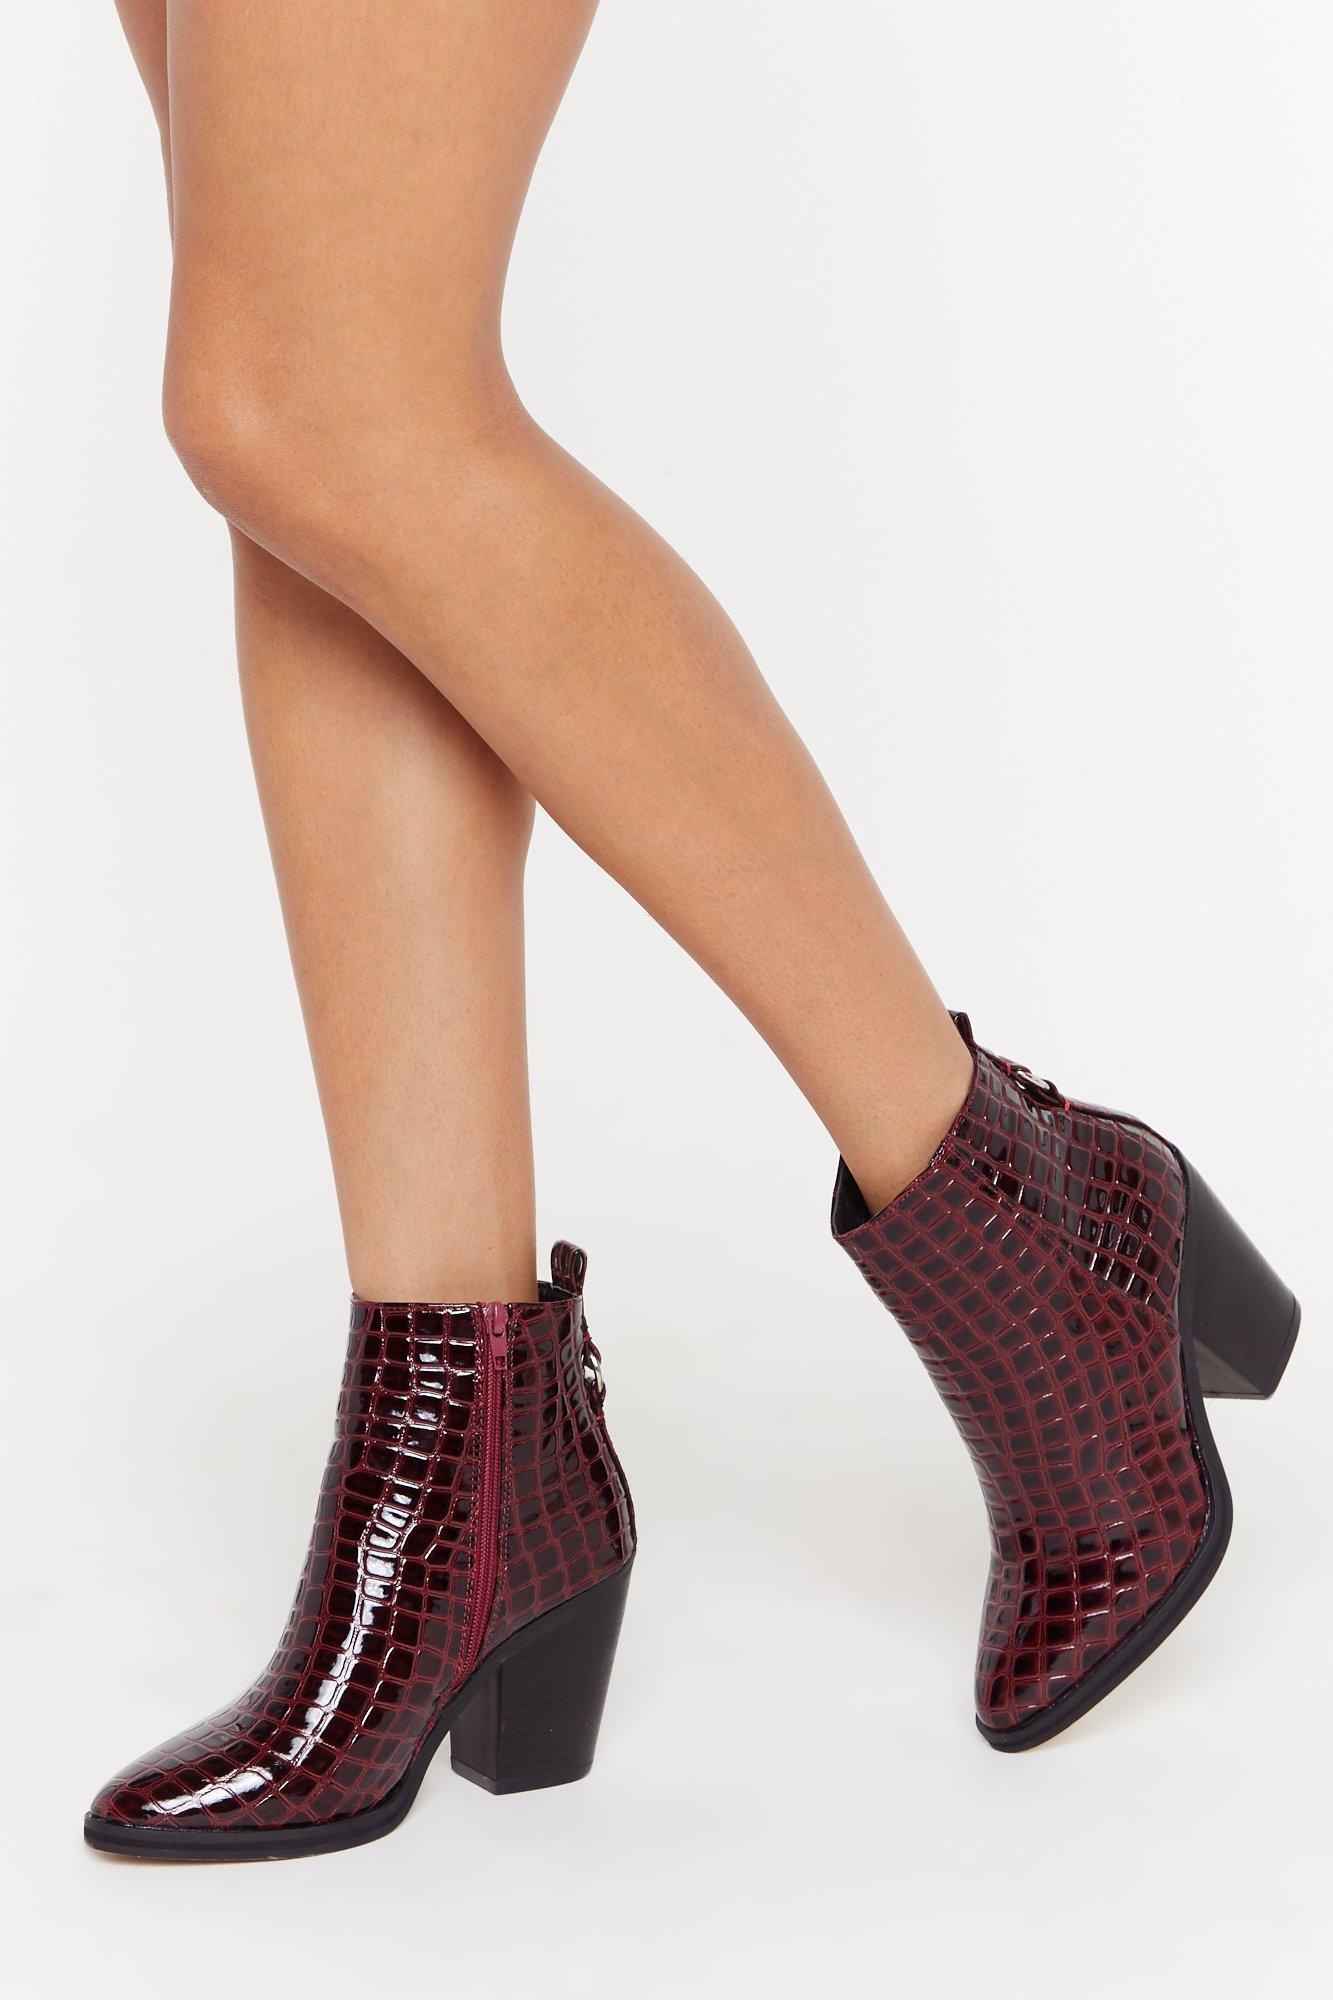 burgundy croc boots